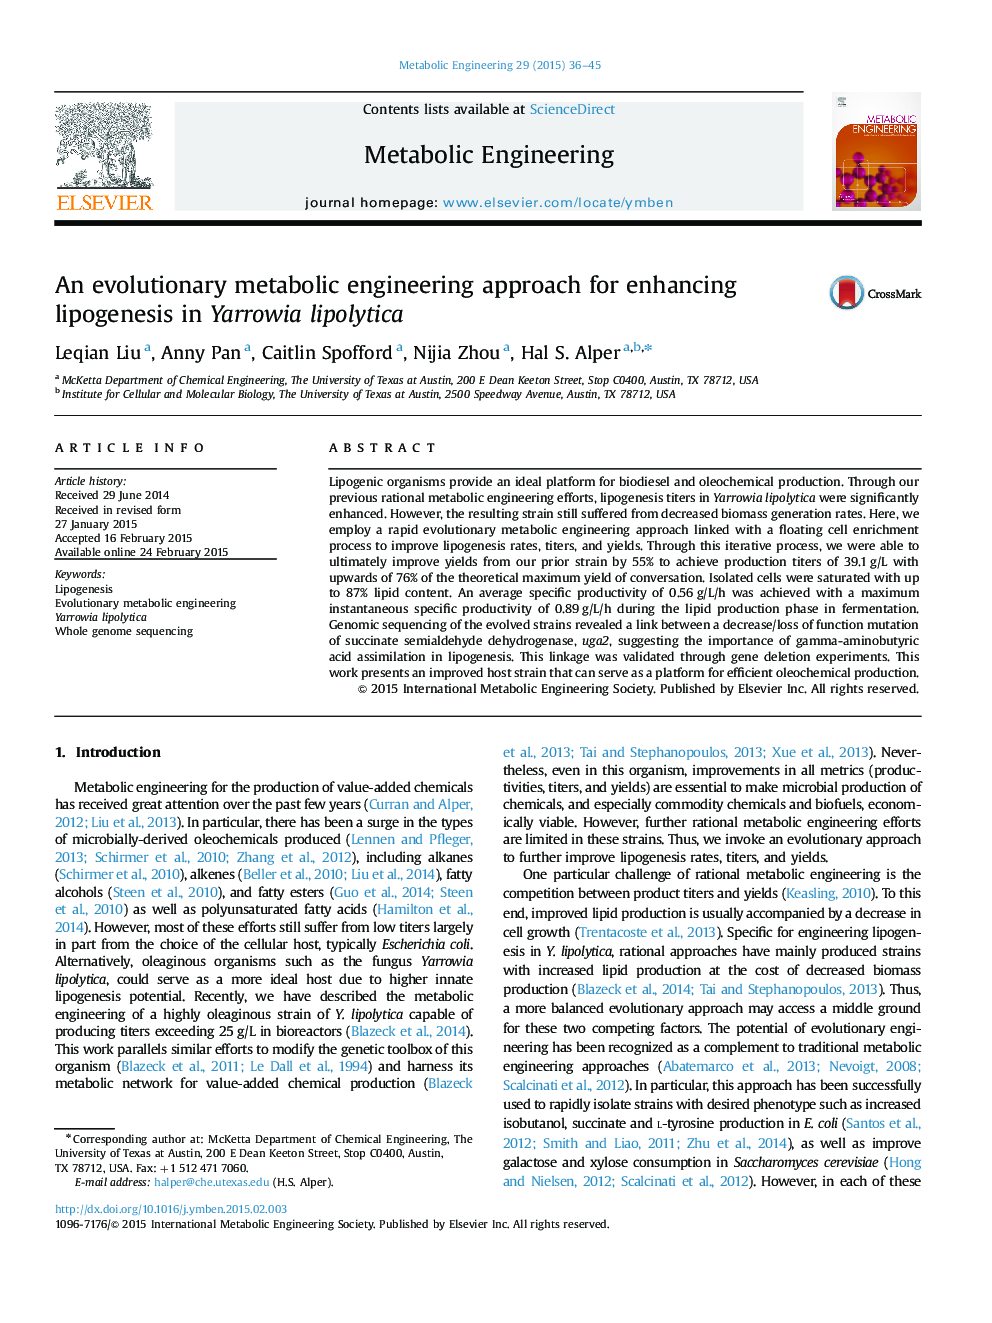 An evolutionary metabolic engineering approach for enhancing lipogenesis in Yarrowia lipolytica